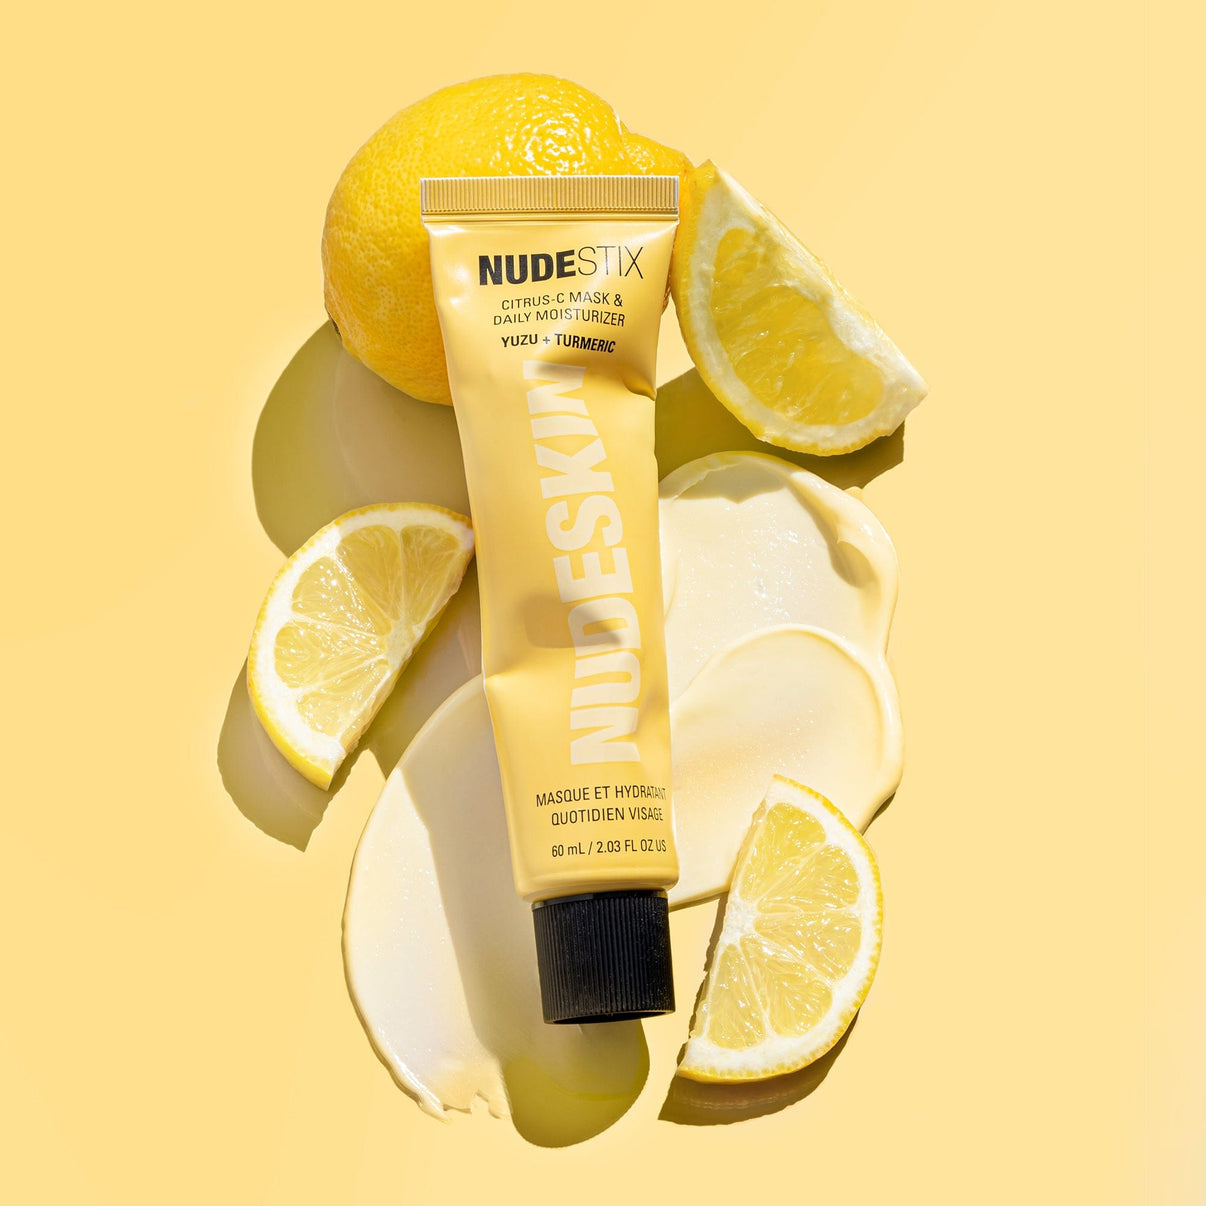 Citrus c mask. Citrus Renew Set for Sensitive Skin